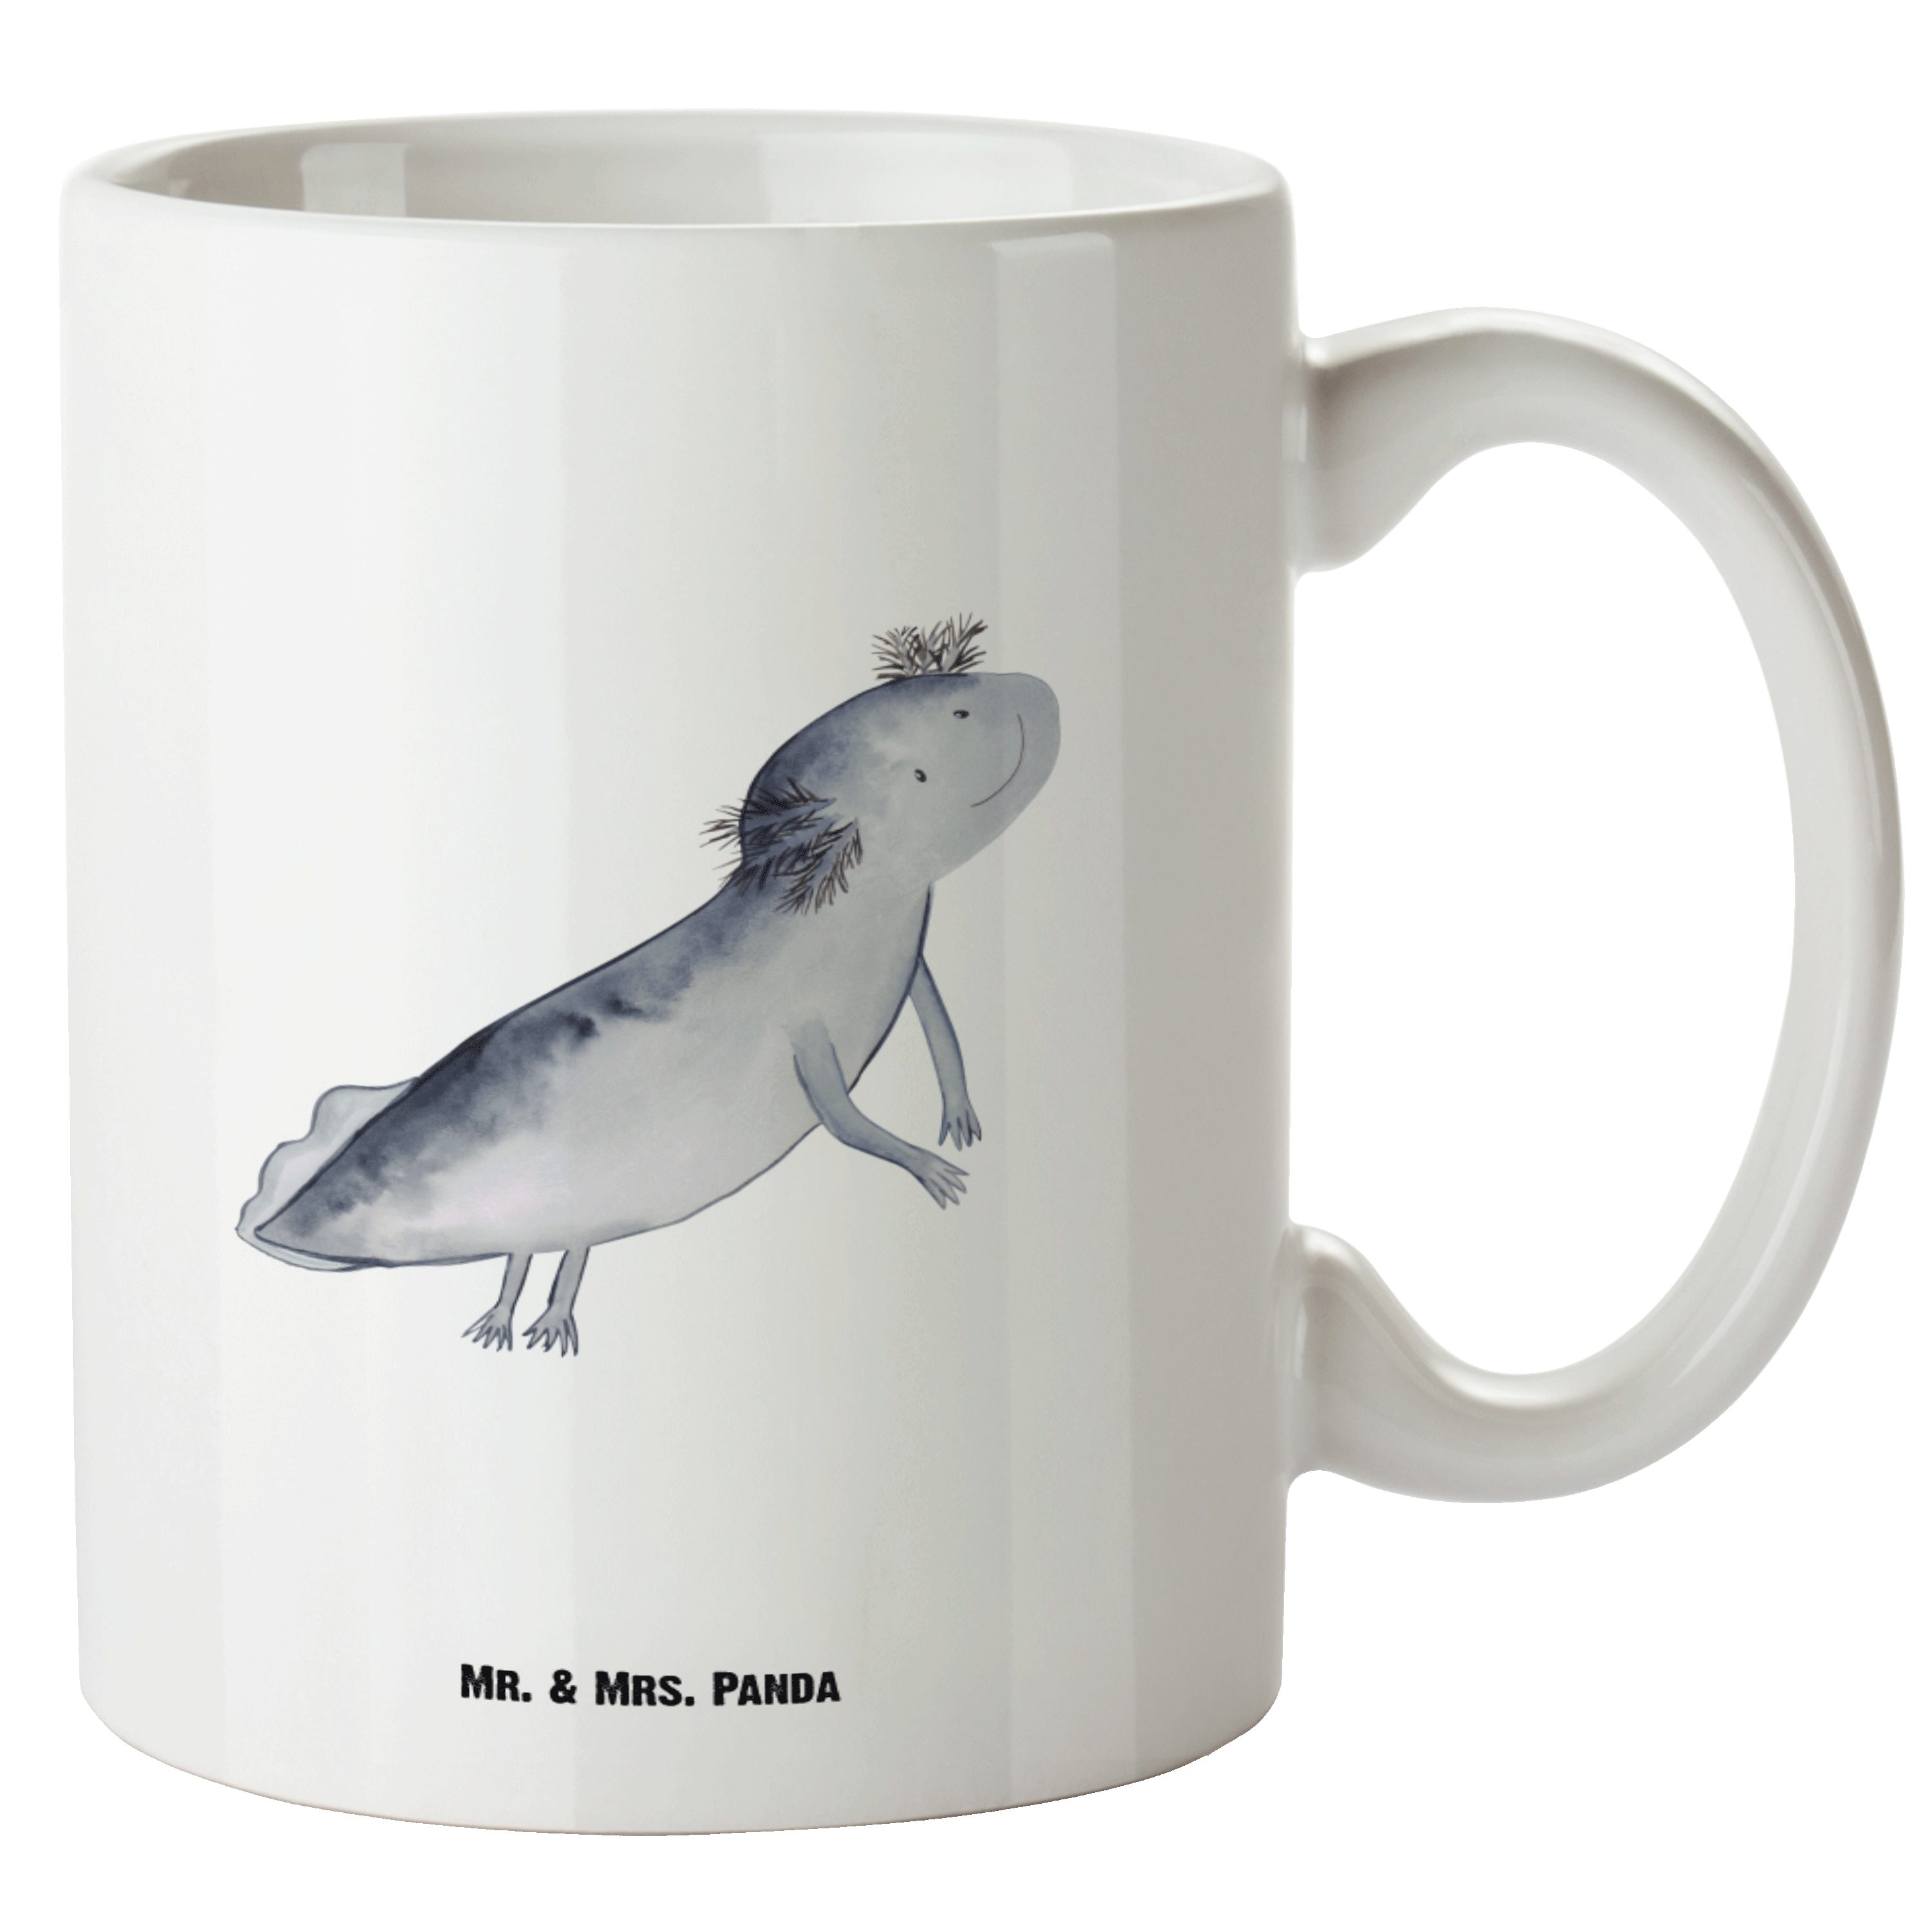 Mr. & Mrs. Panda Tasse Axolotl schwimmt - Weiß - Geschenk, Jumbo Tasse, Grosse Kaffeetasse, XL Tasse Keramik